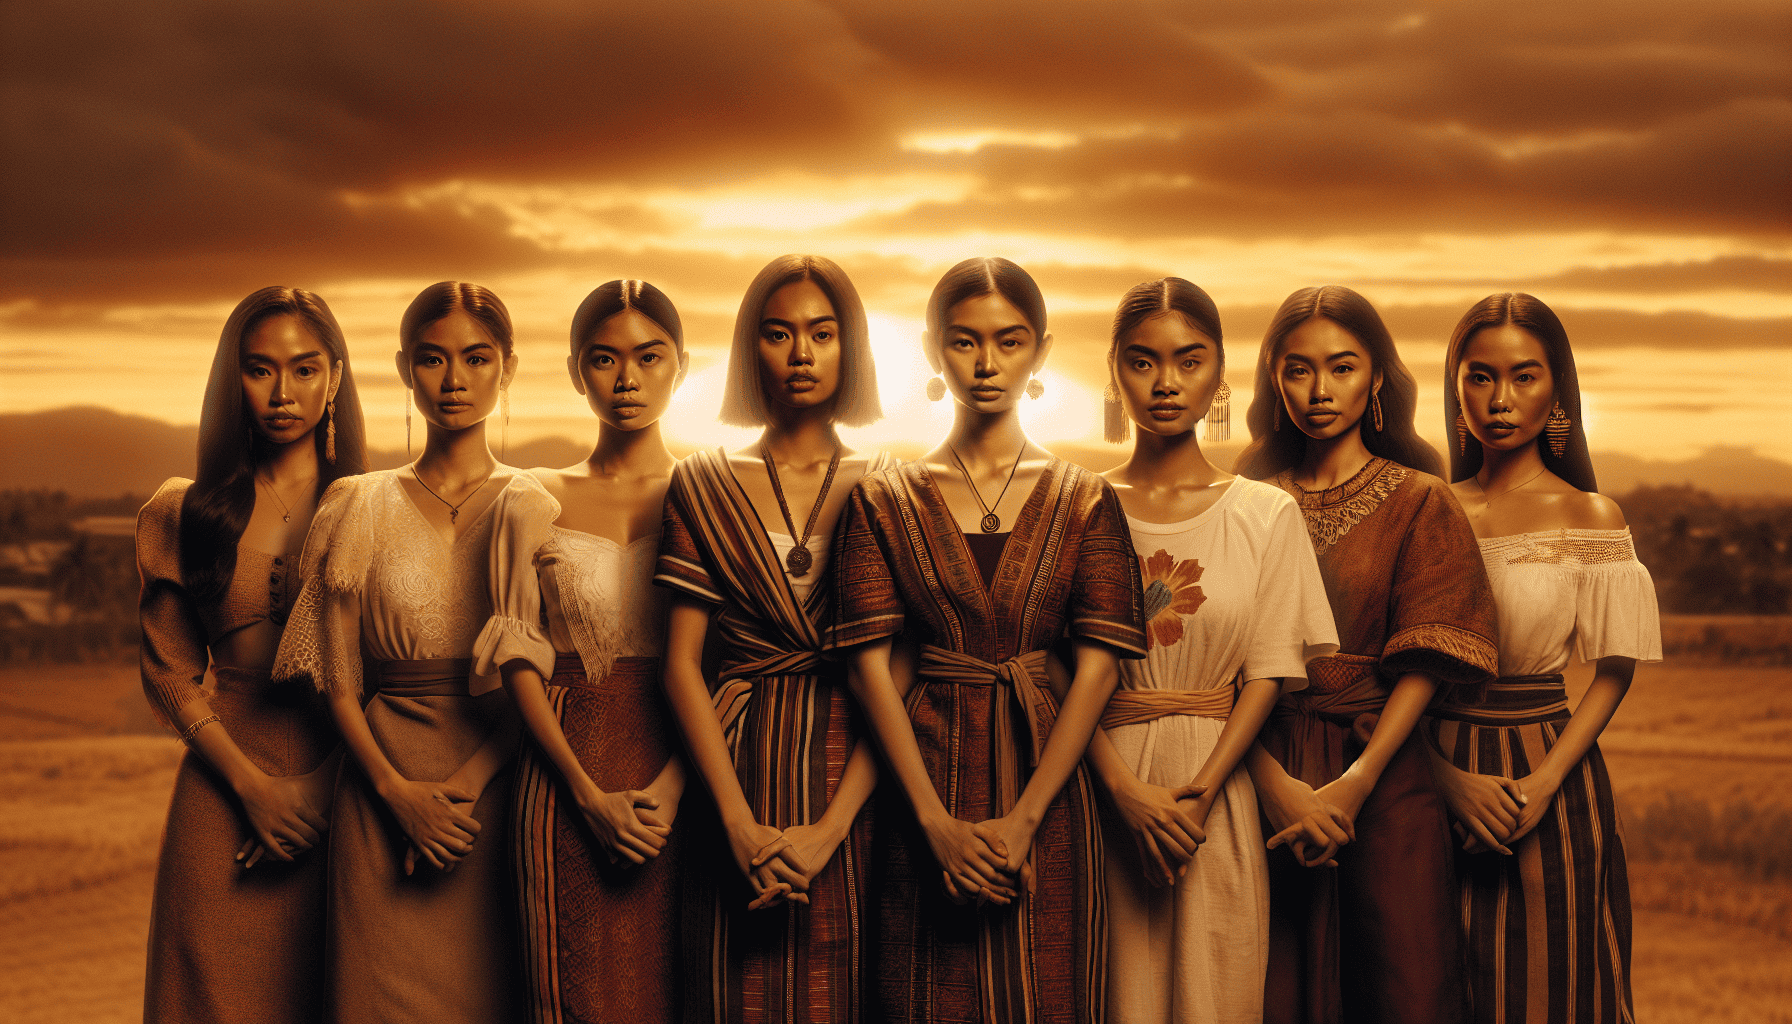 Filipina women embracing strength and beauty